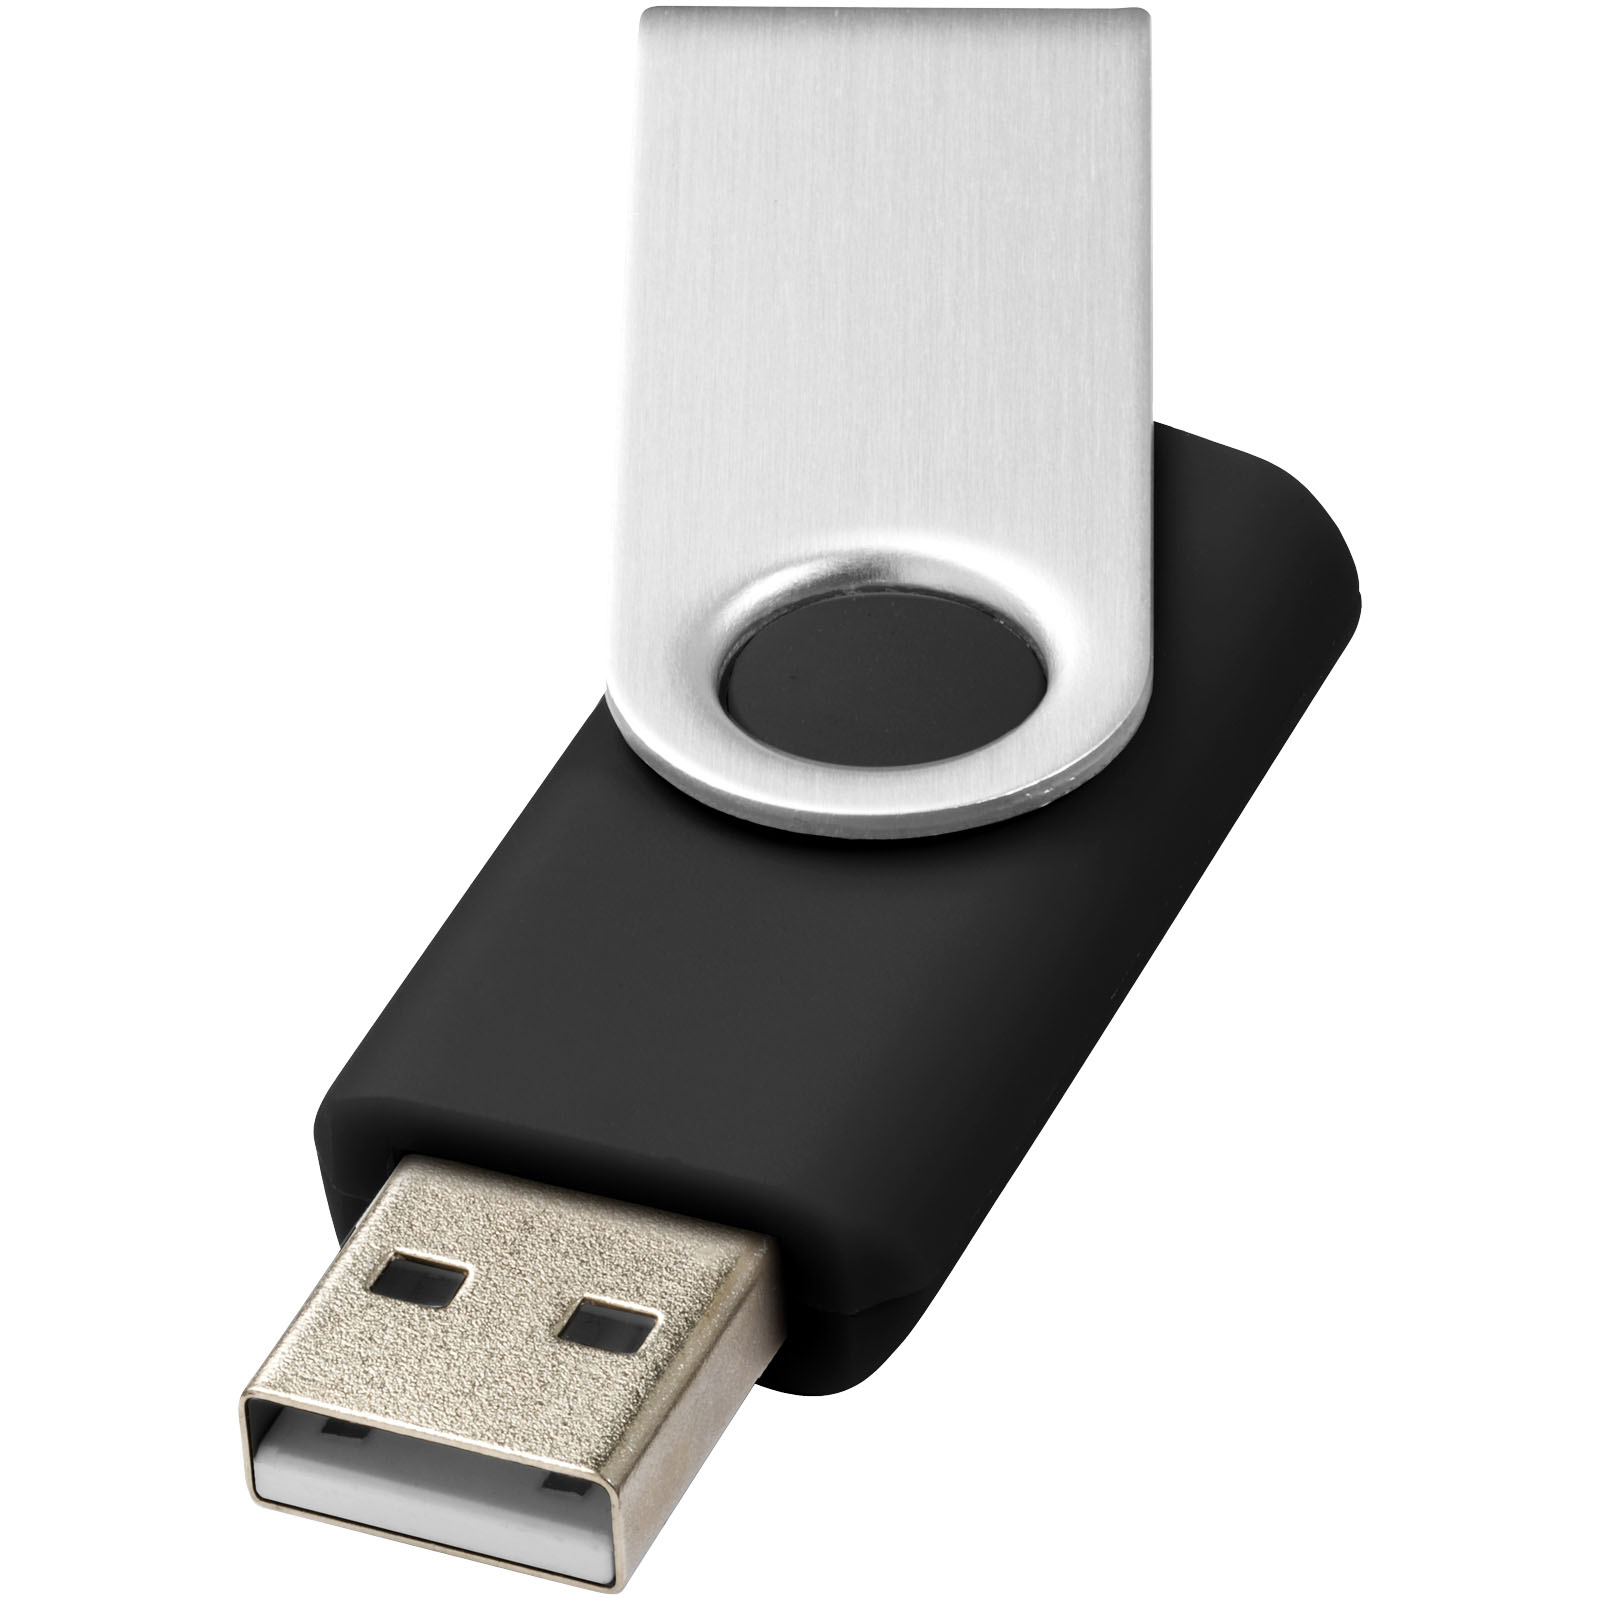 USB Flash Drives - Rotate-basic 2GB USB flash drive